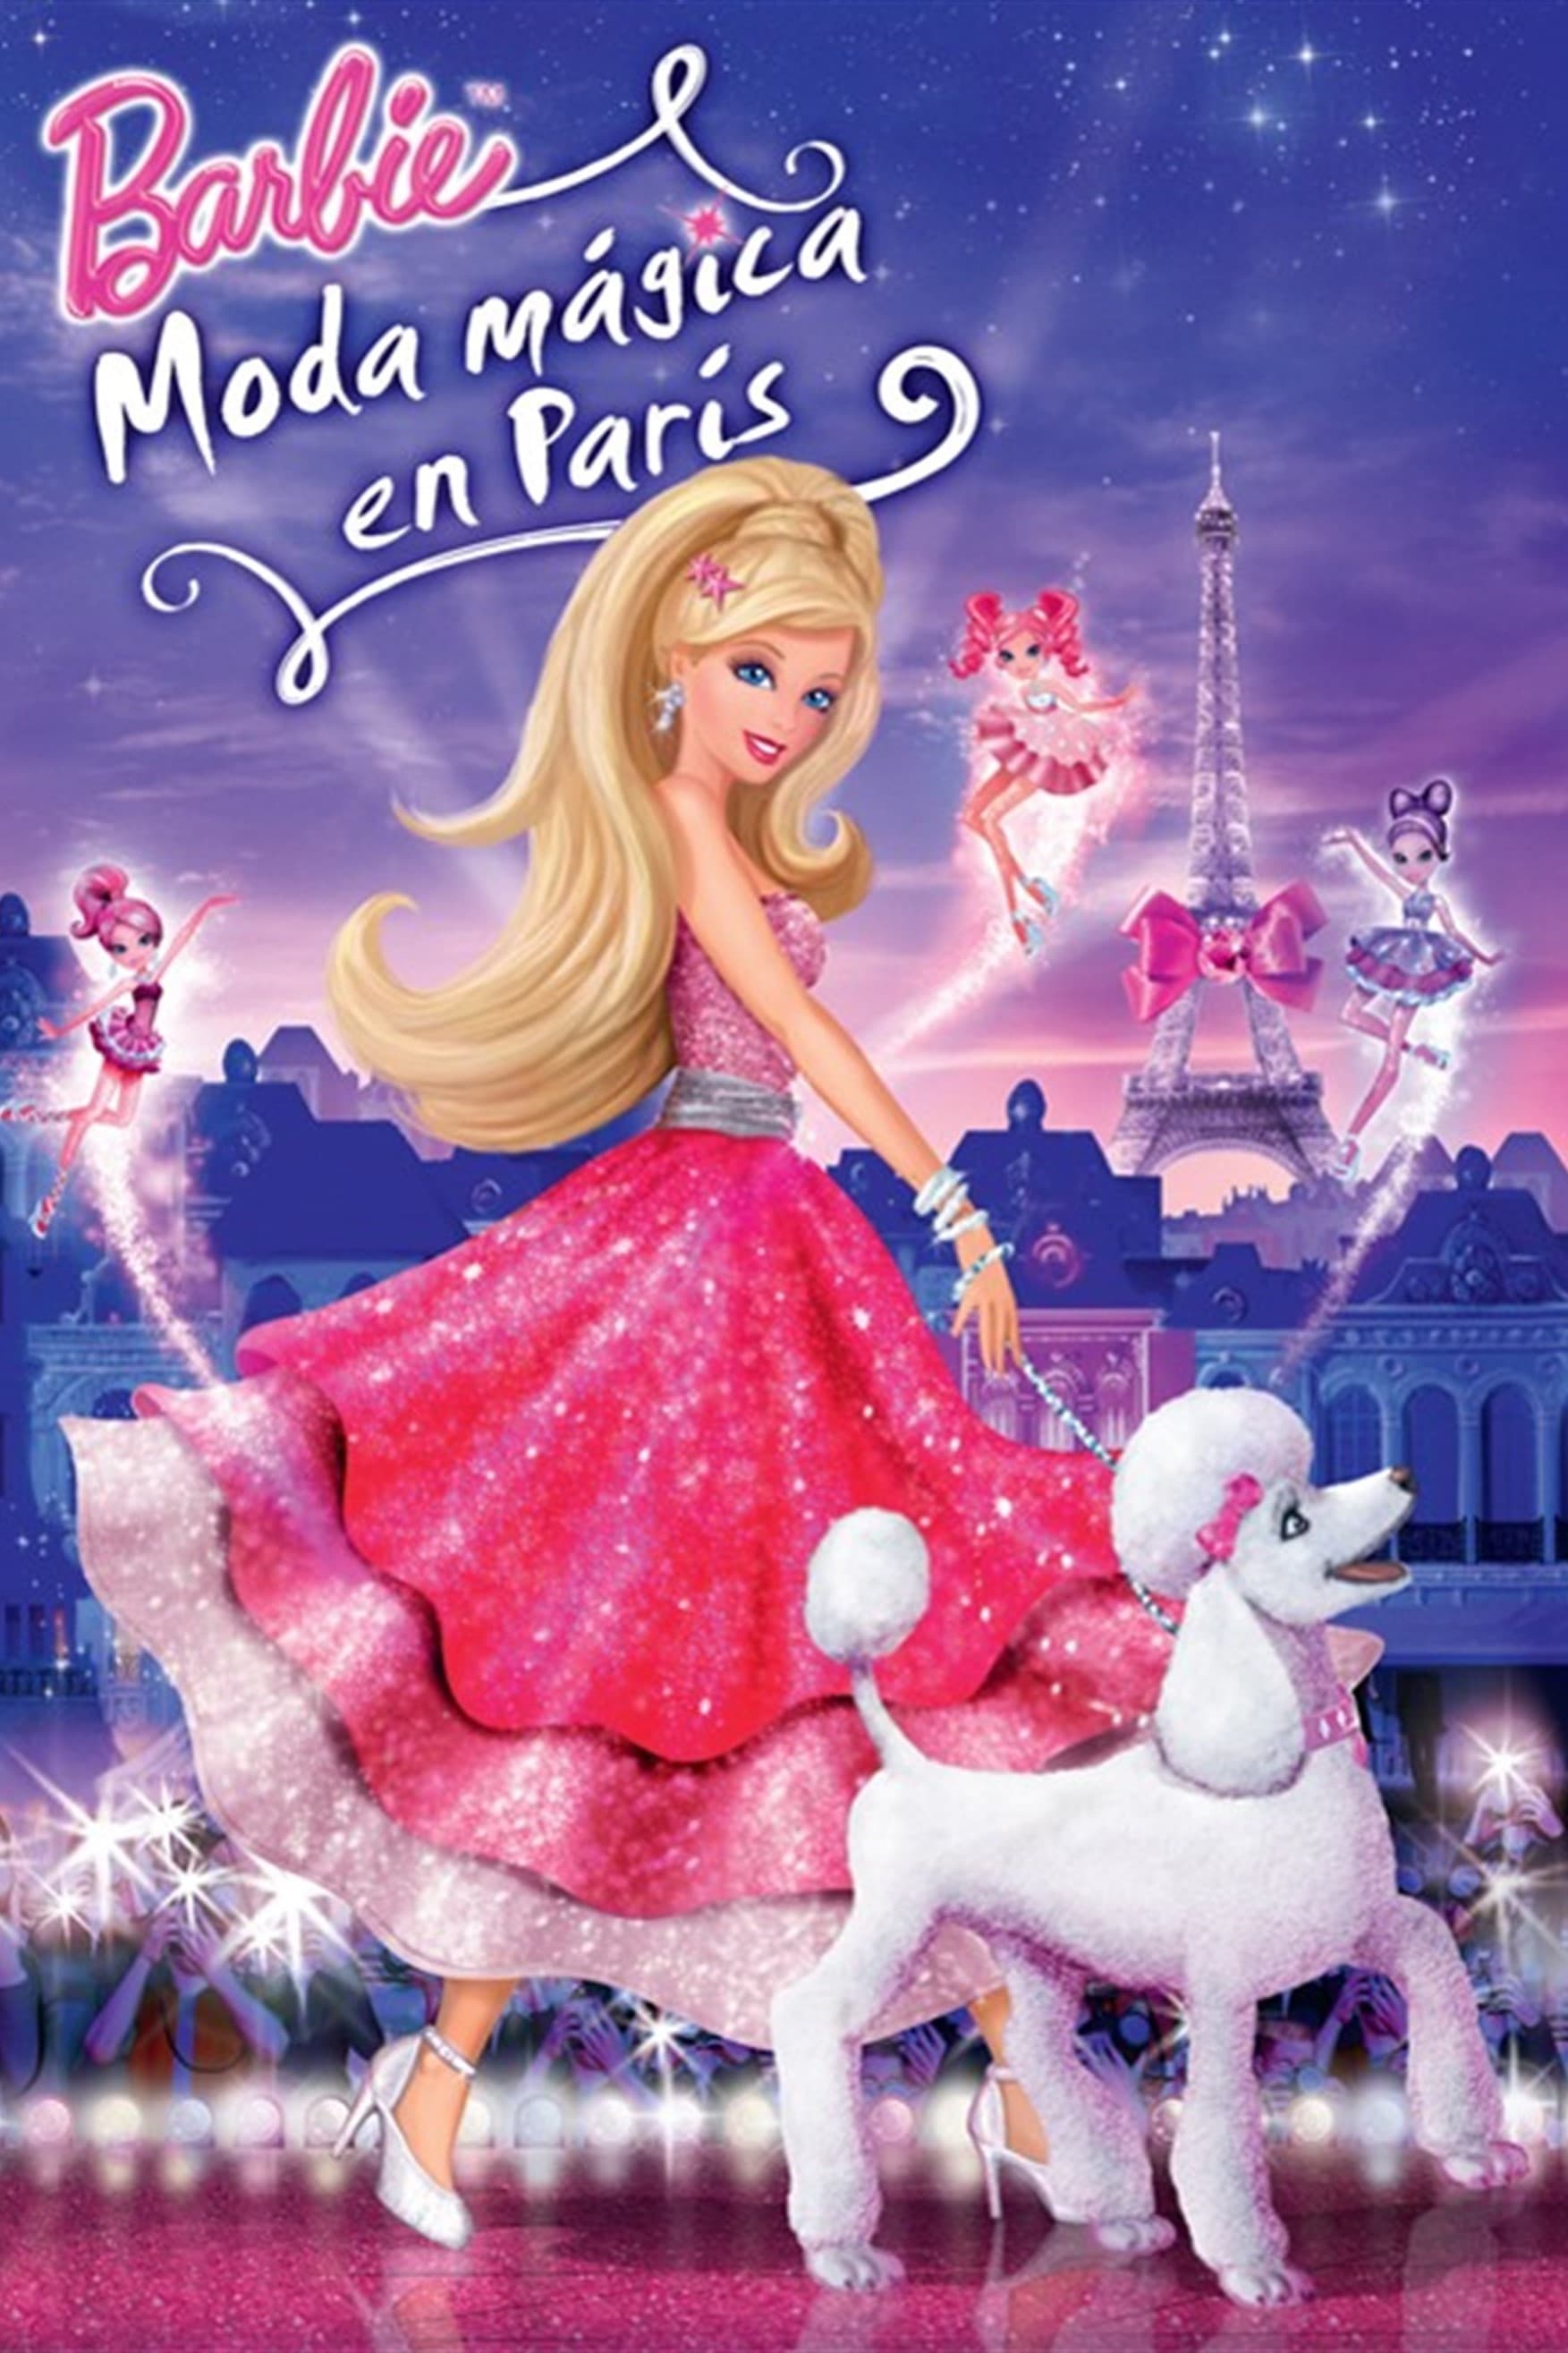 Barbie: Moda mágica en París (2010)